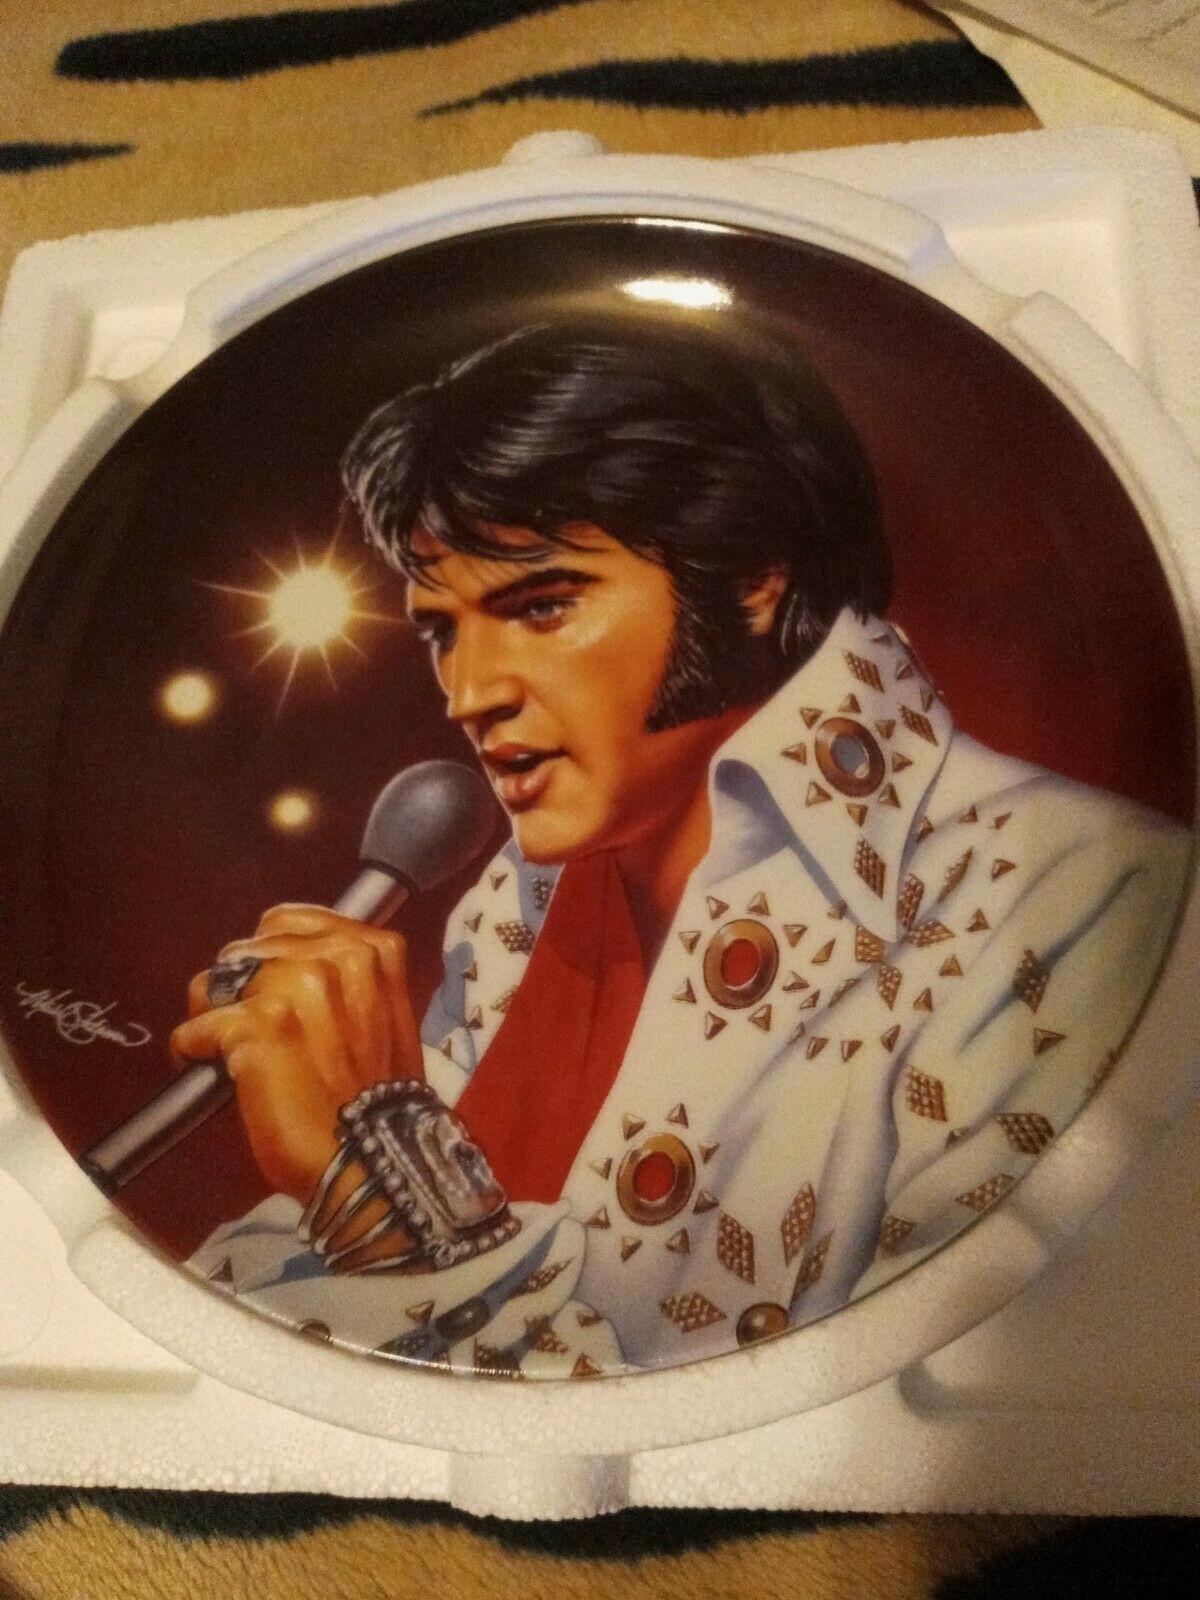 Elvis Presley Plate Collection